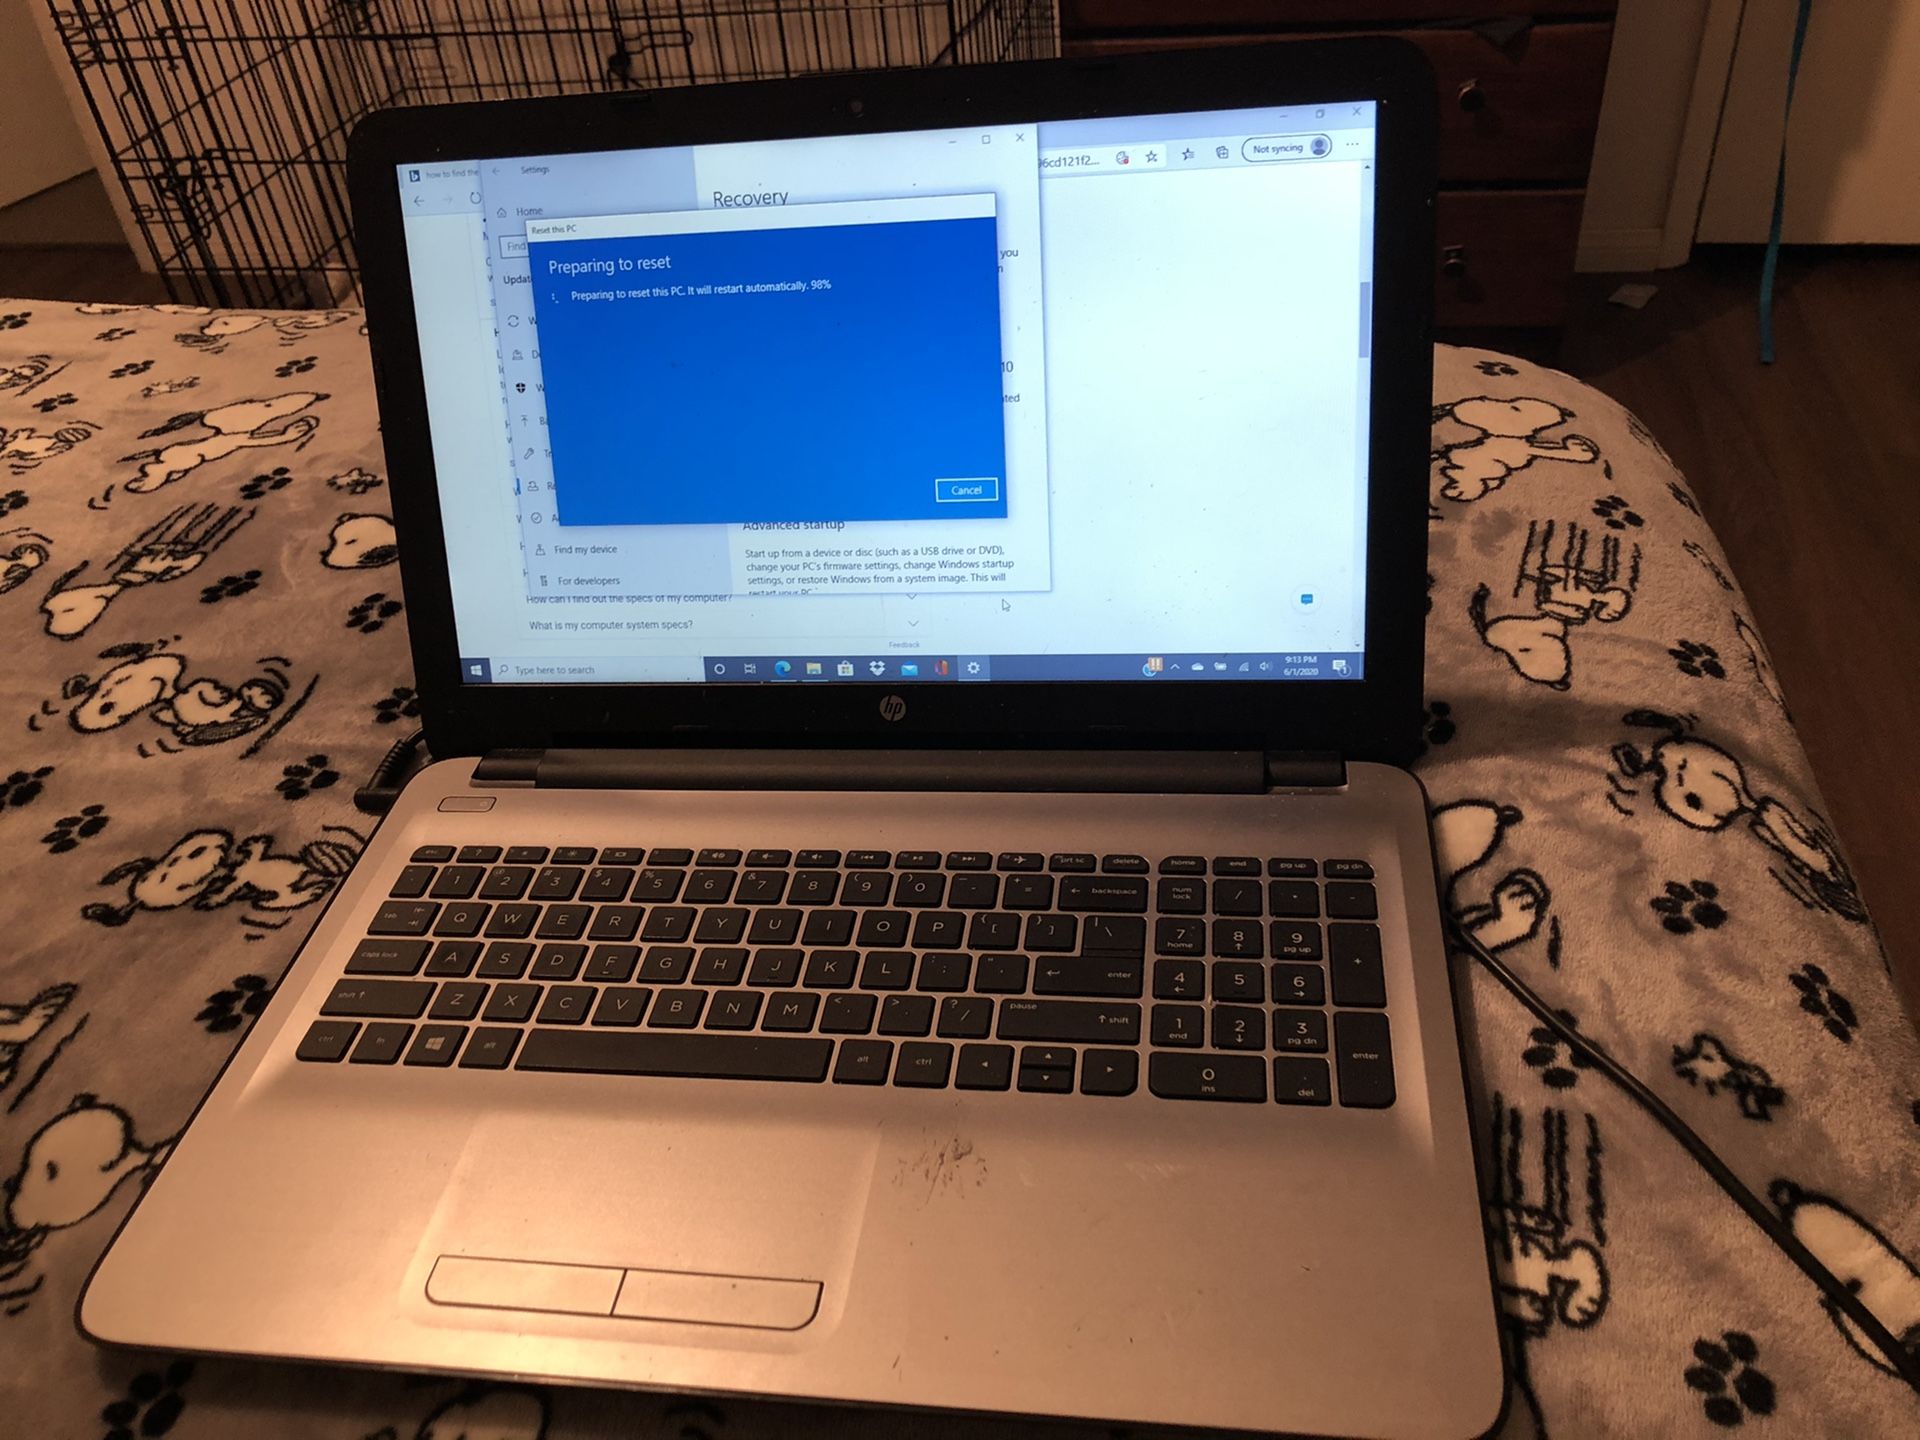 Used HP Laptop